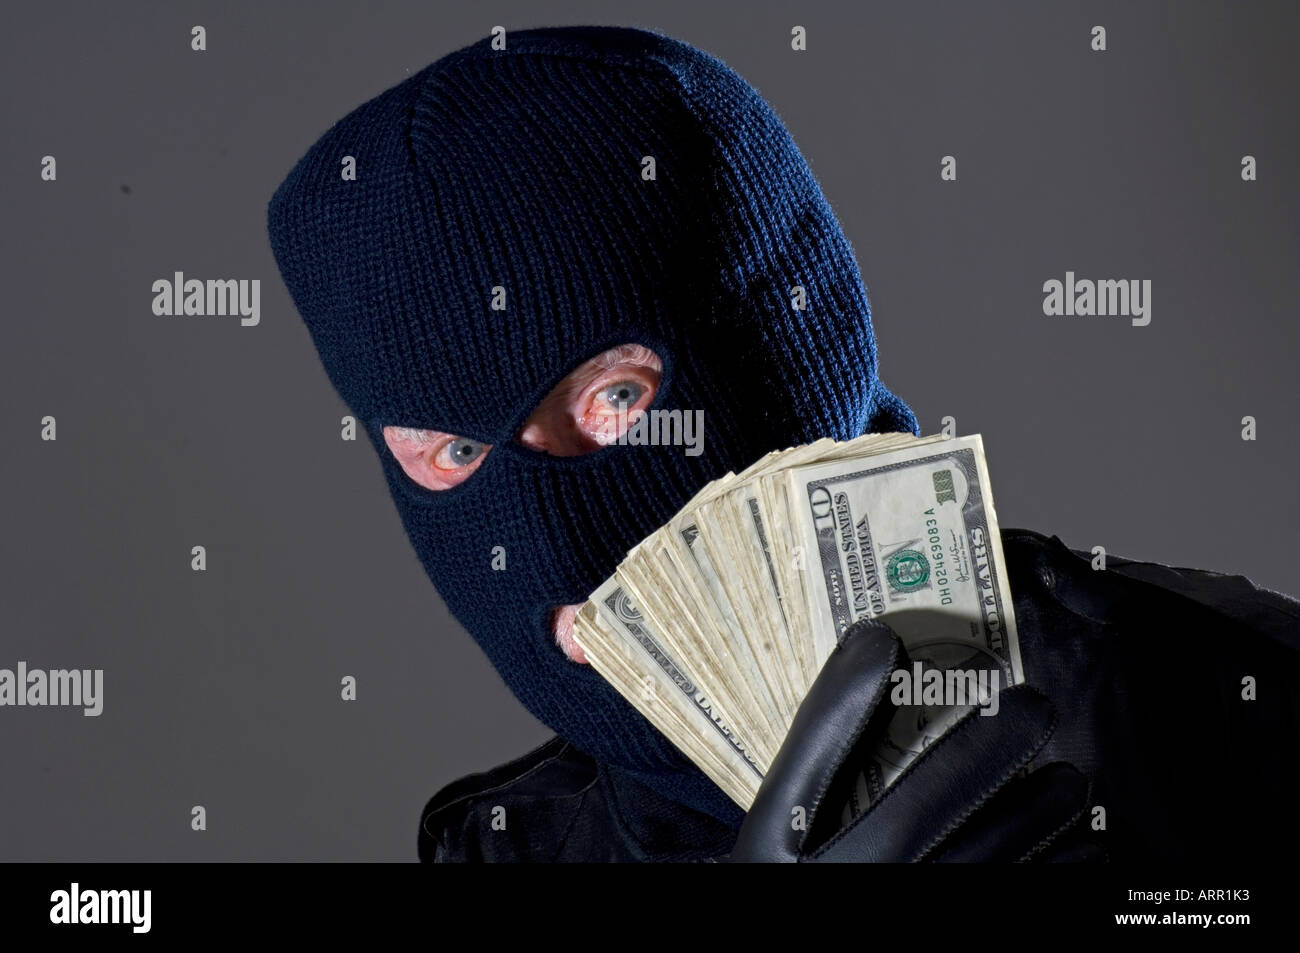 bad guy man flashlight wearing ski mask Stock Photo